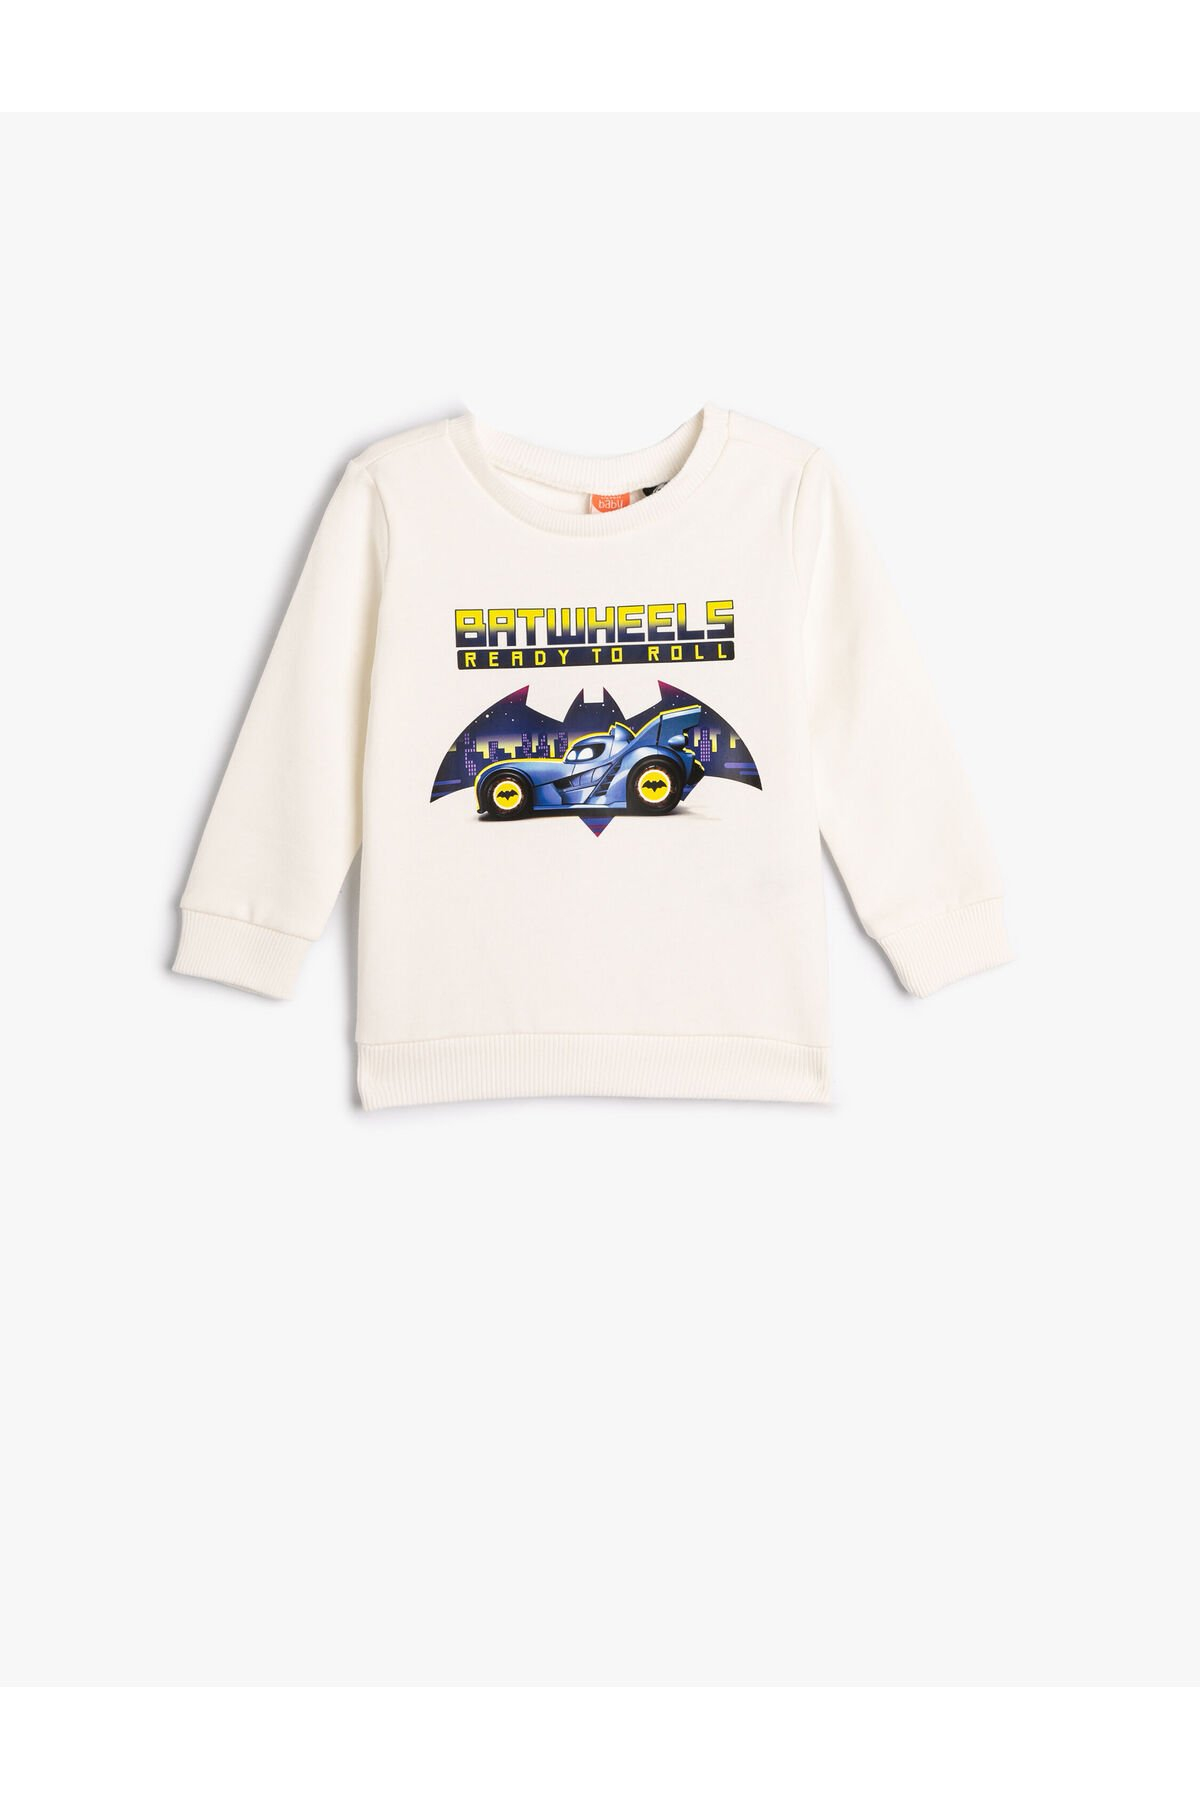 Koton Batman Sweatshirt Licensed Long Sleeve Crew Neck Cotton Raised